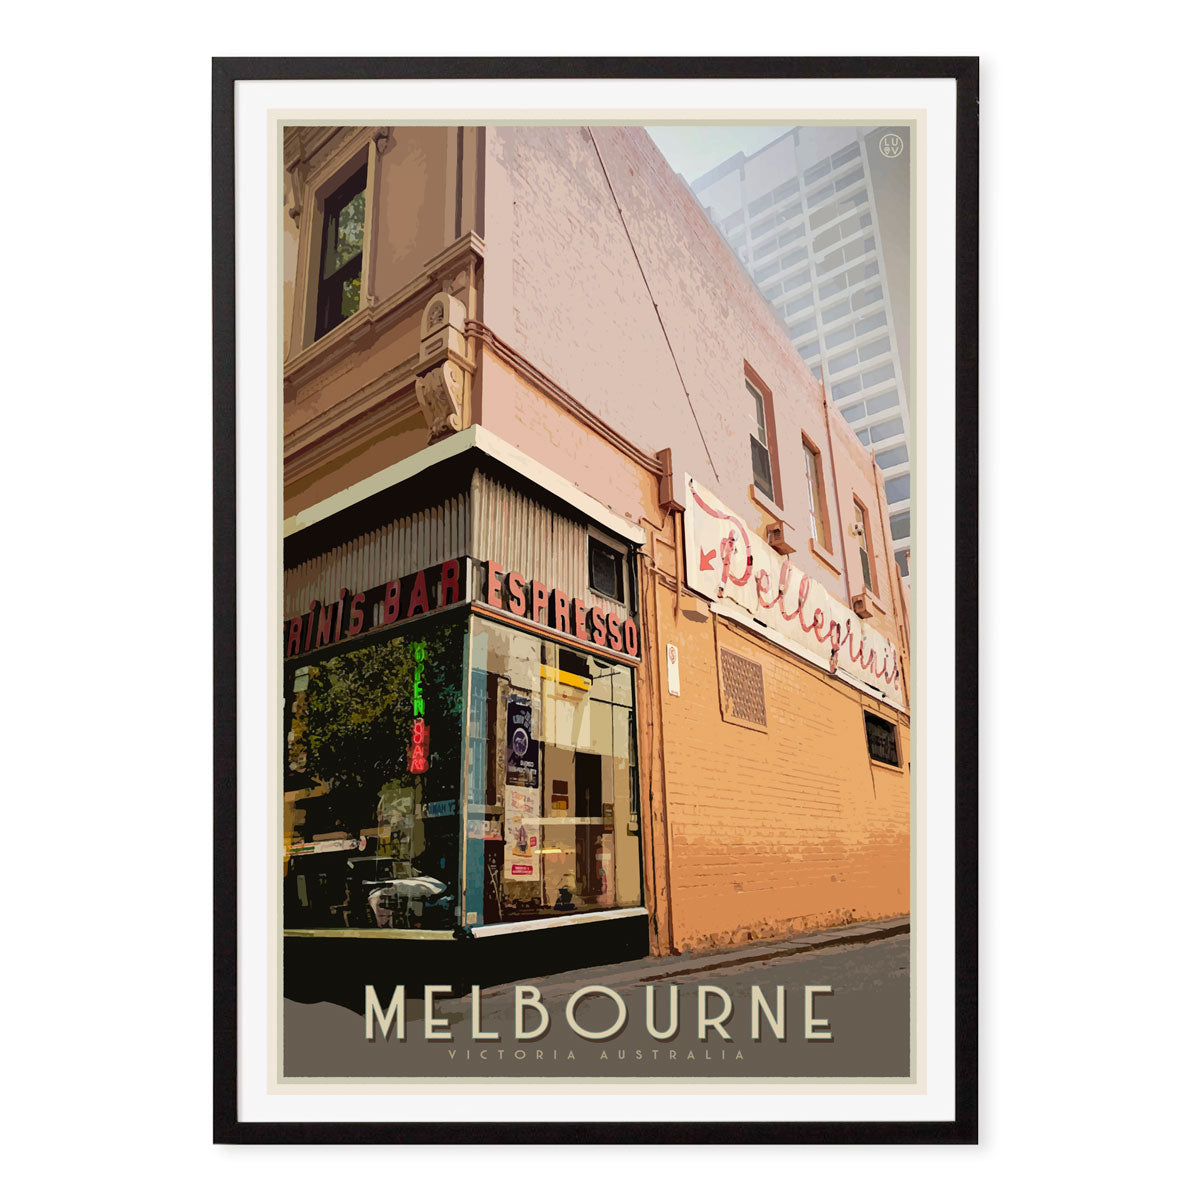 Melbourne Espresso Bar retro vintage poster in black frame by Places We Luv